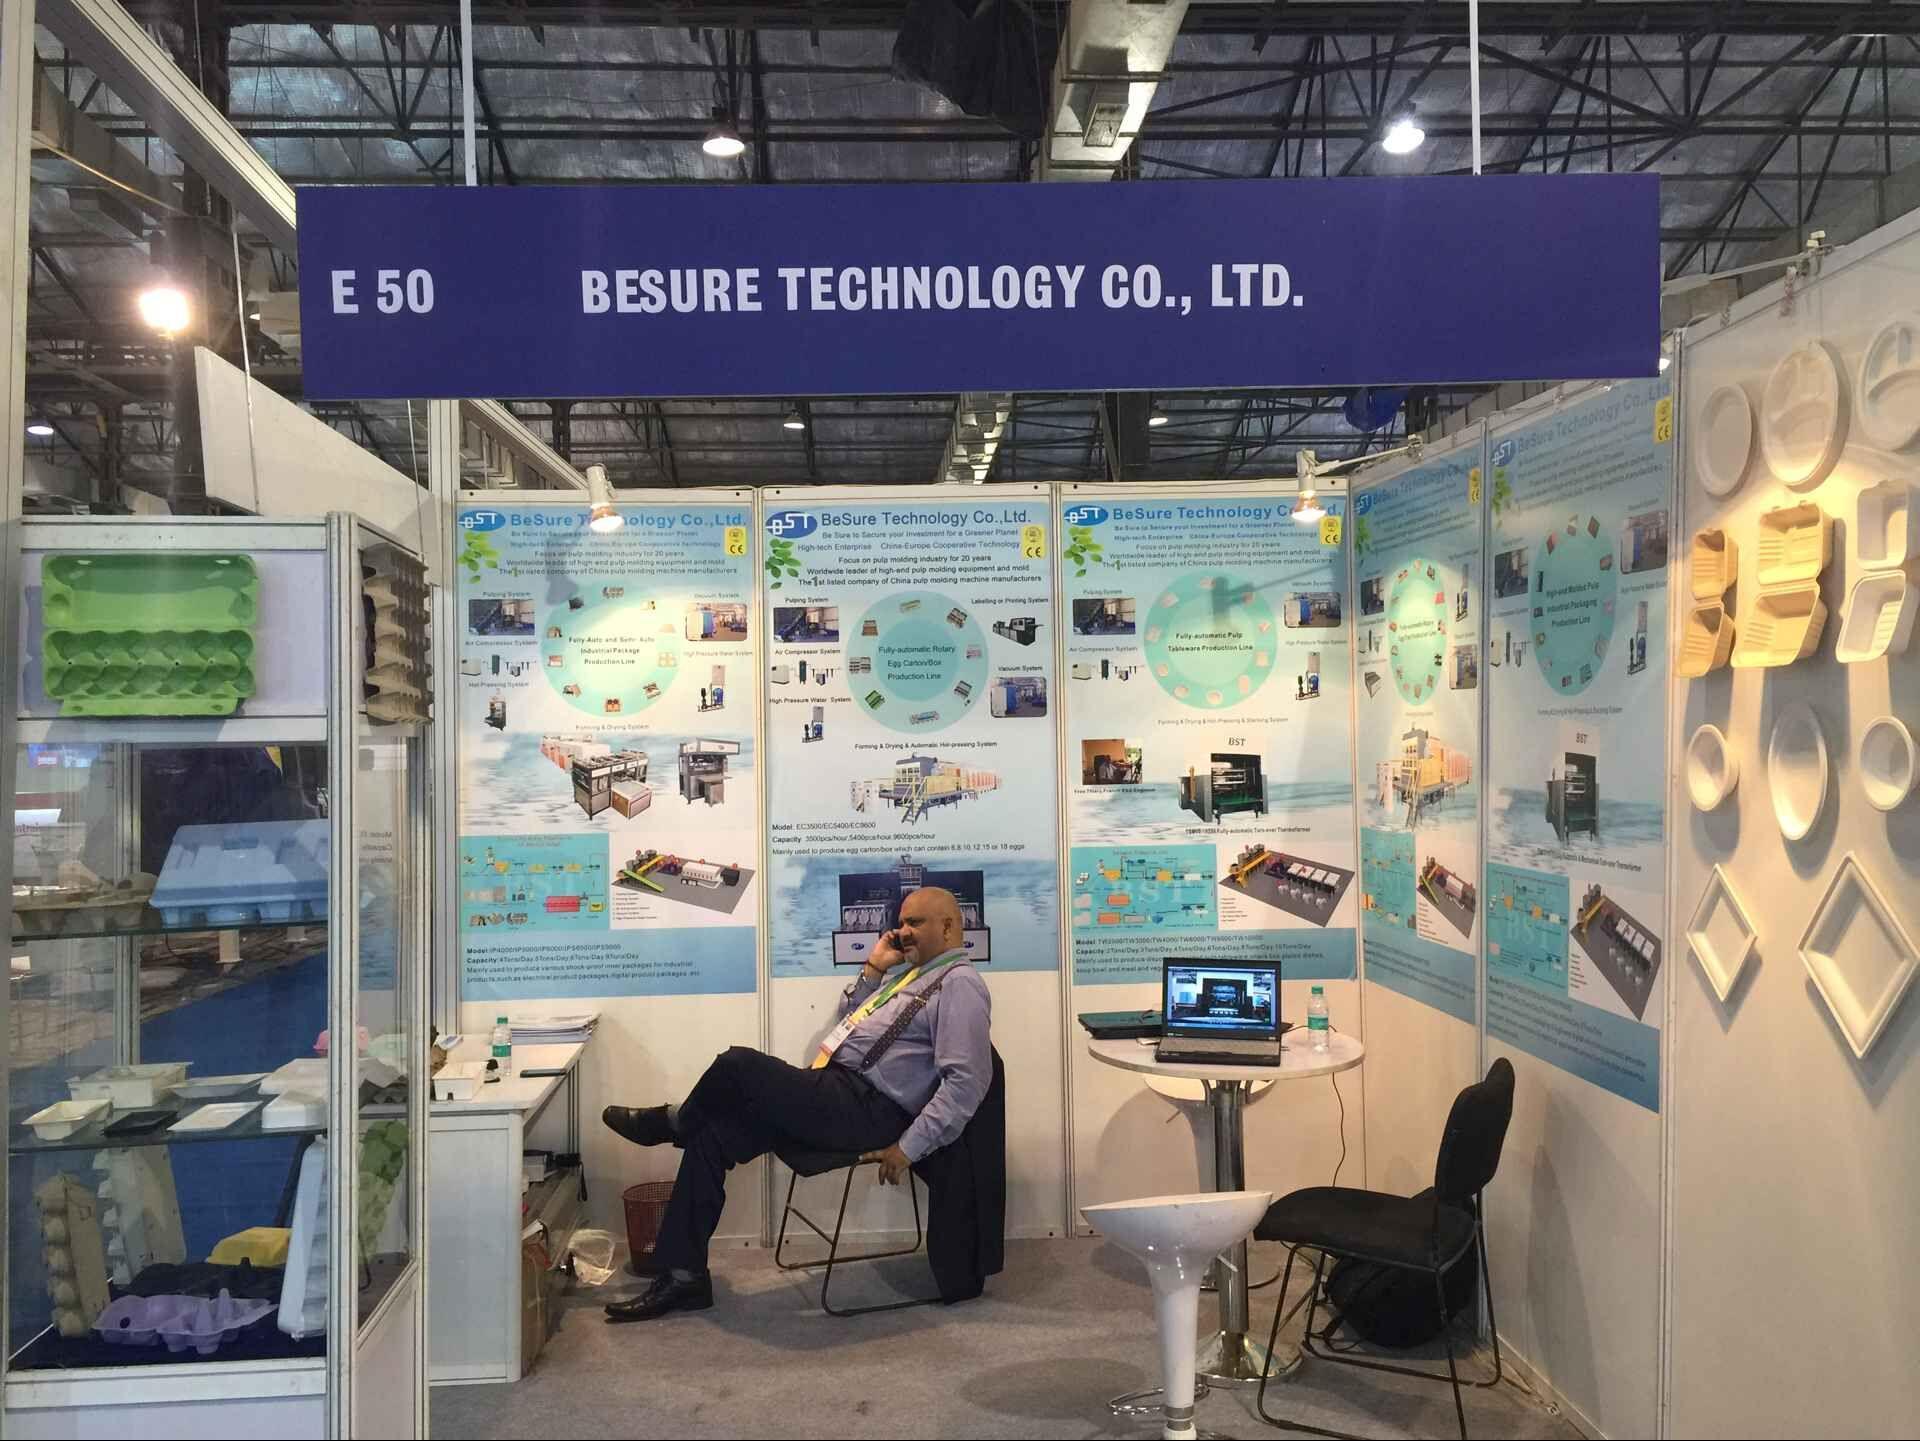 Cuando Bison Technology India Exhibition 2016 está en progreso Stand No .: E50